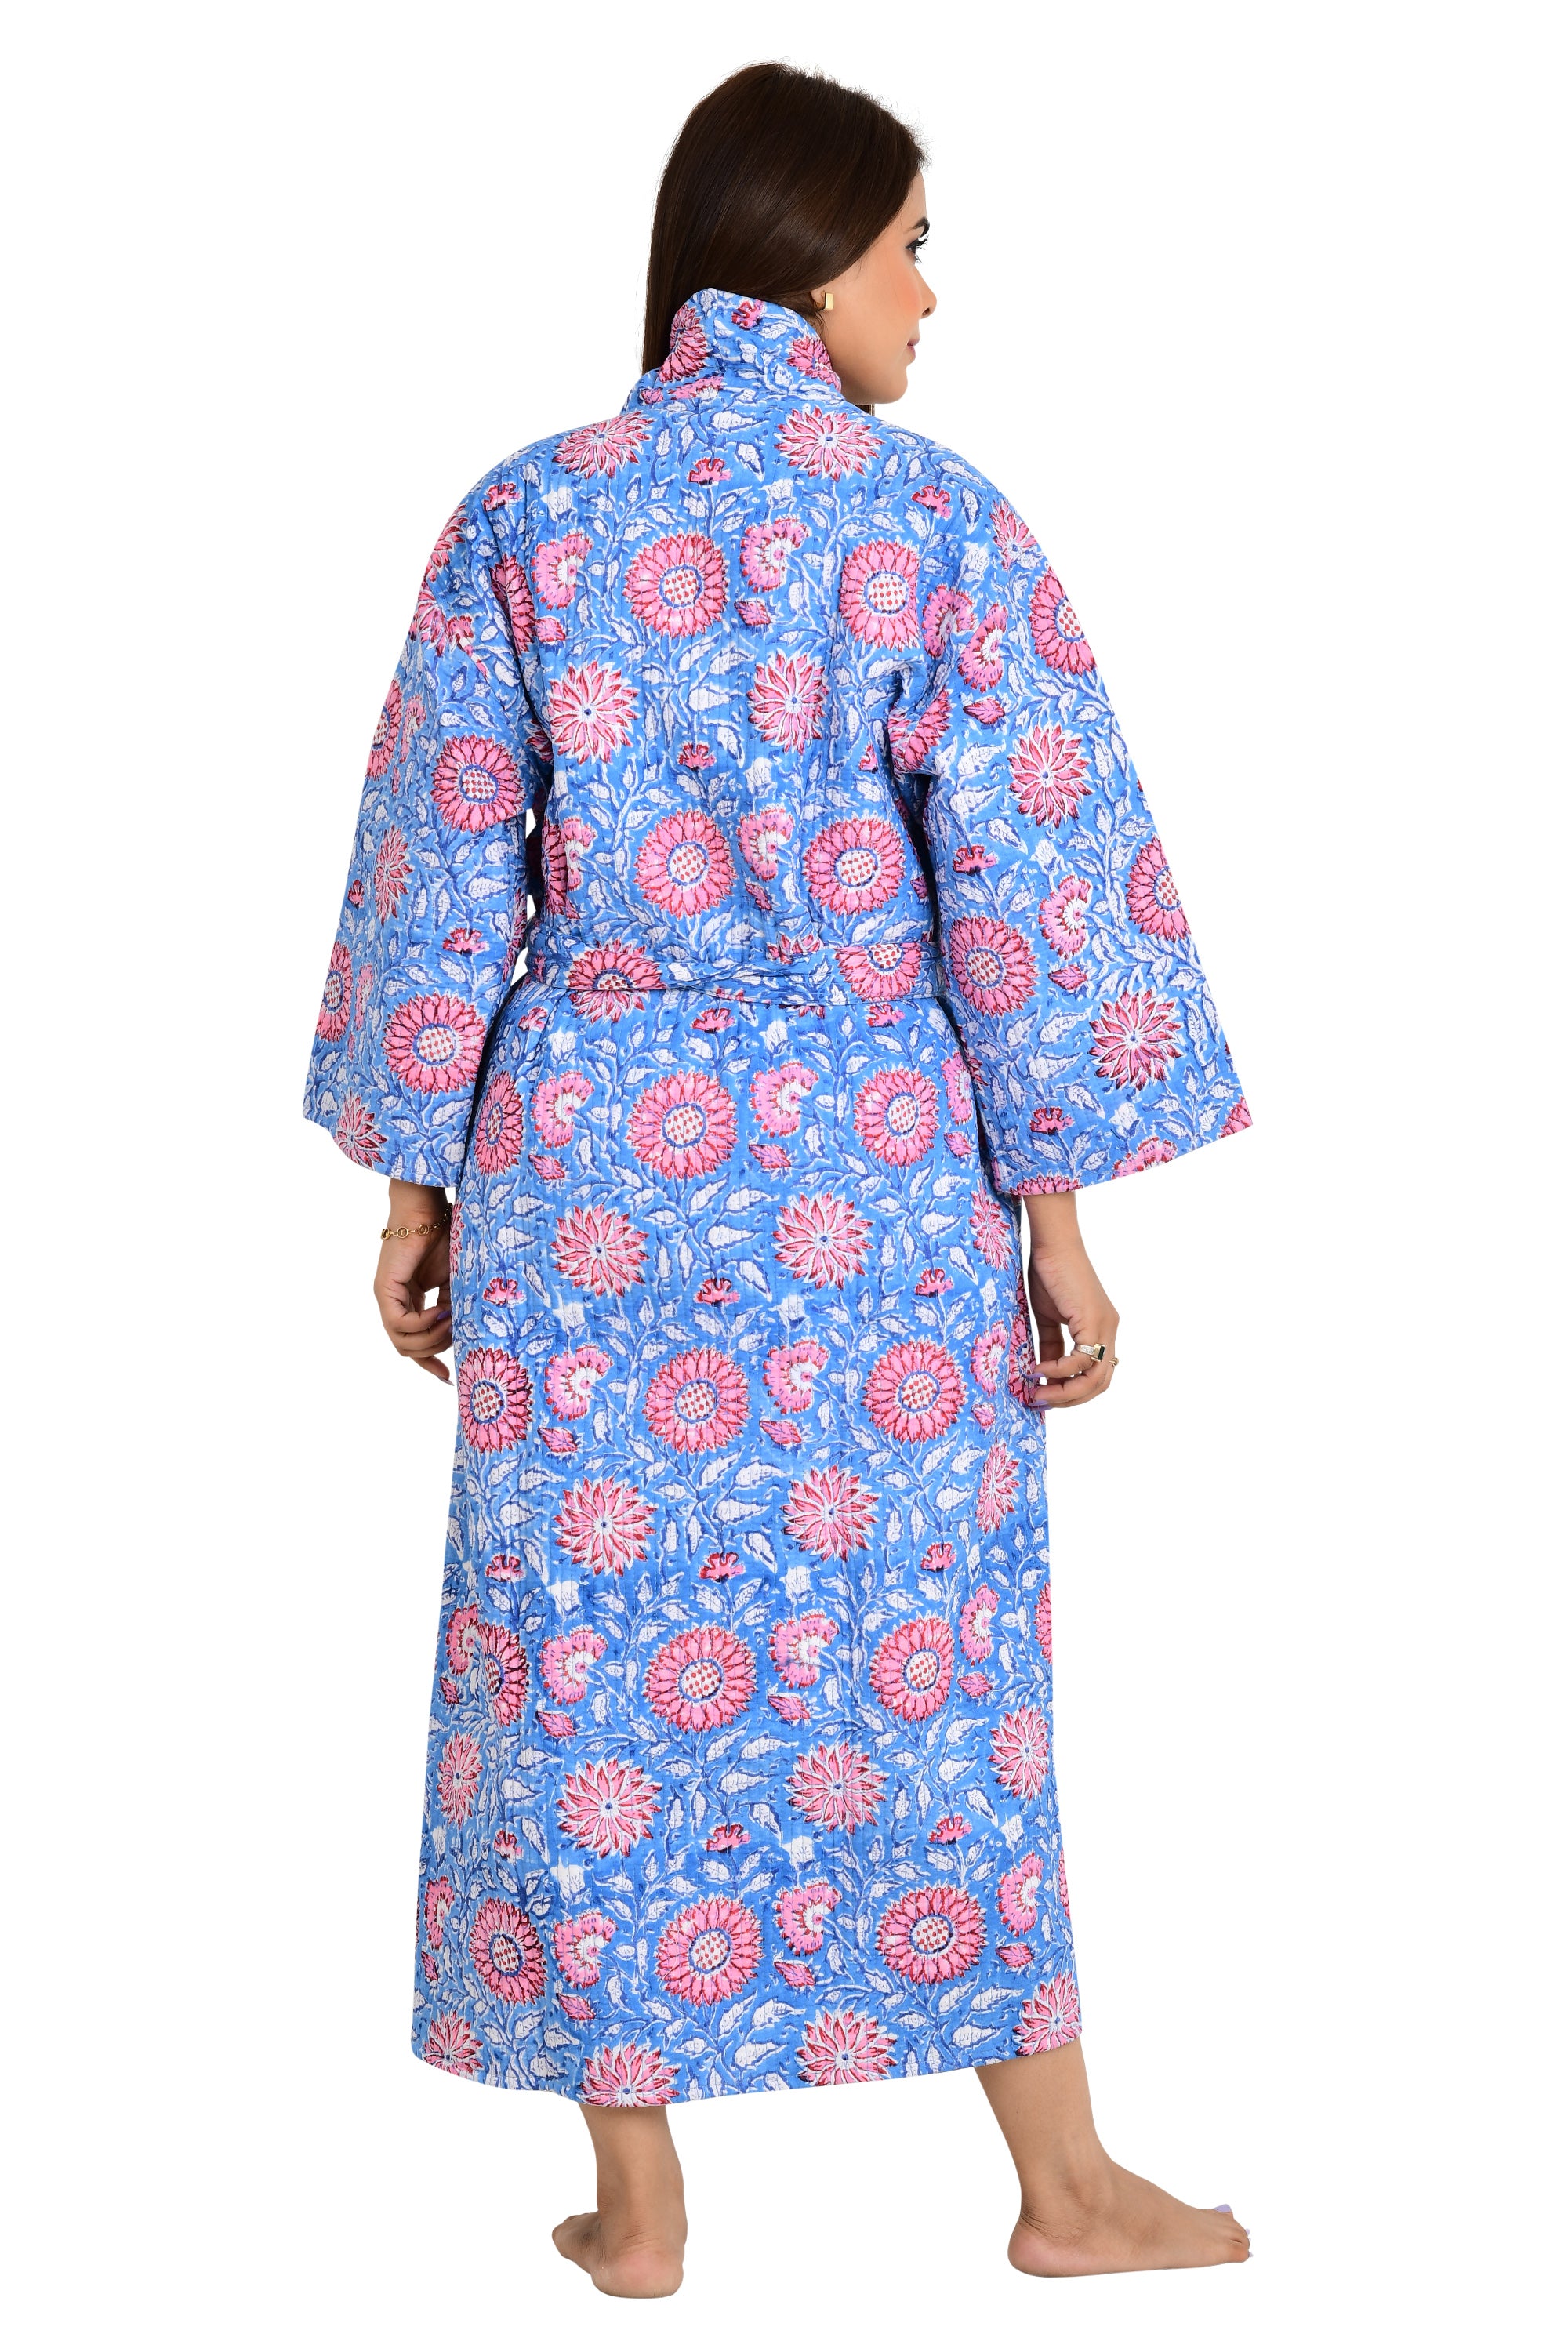 Kantha Quilted Pure Cotton Reversible Long Kimono Women Blue Pink Sun Flower